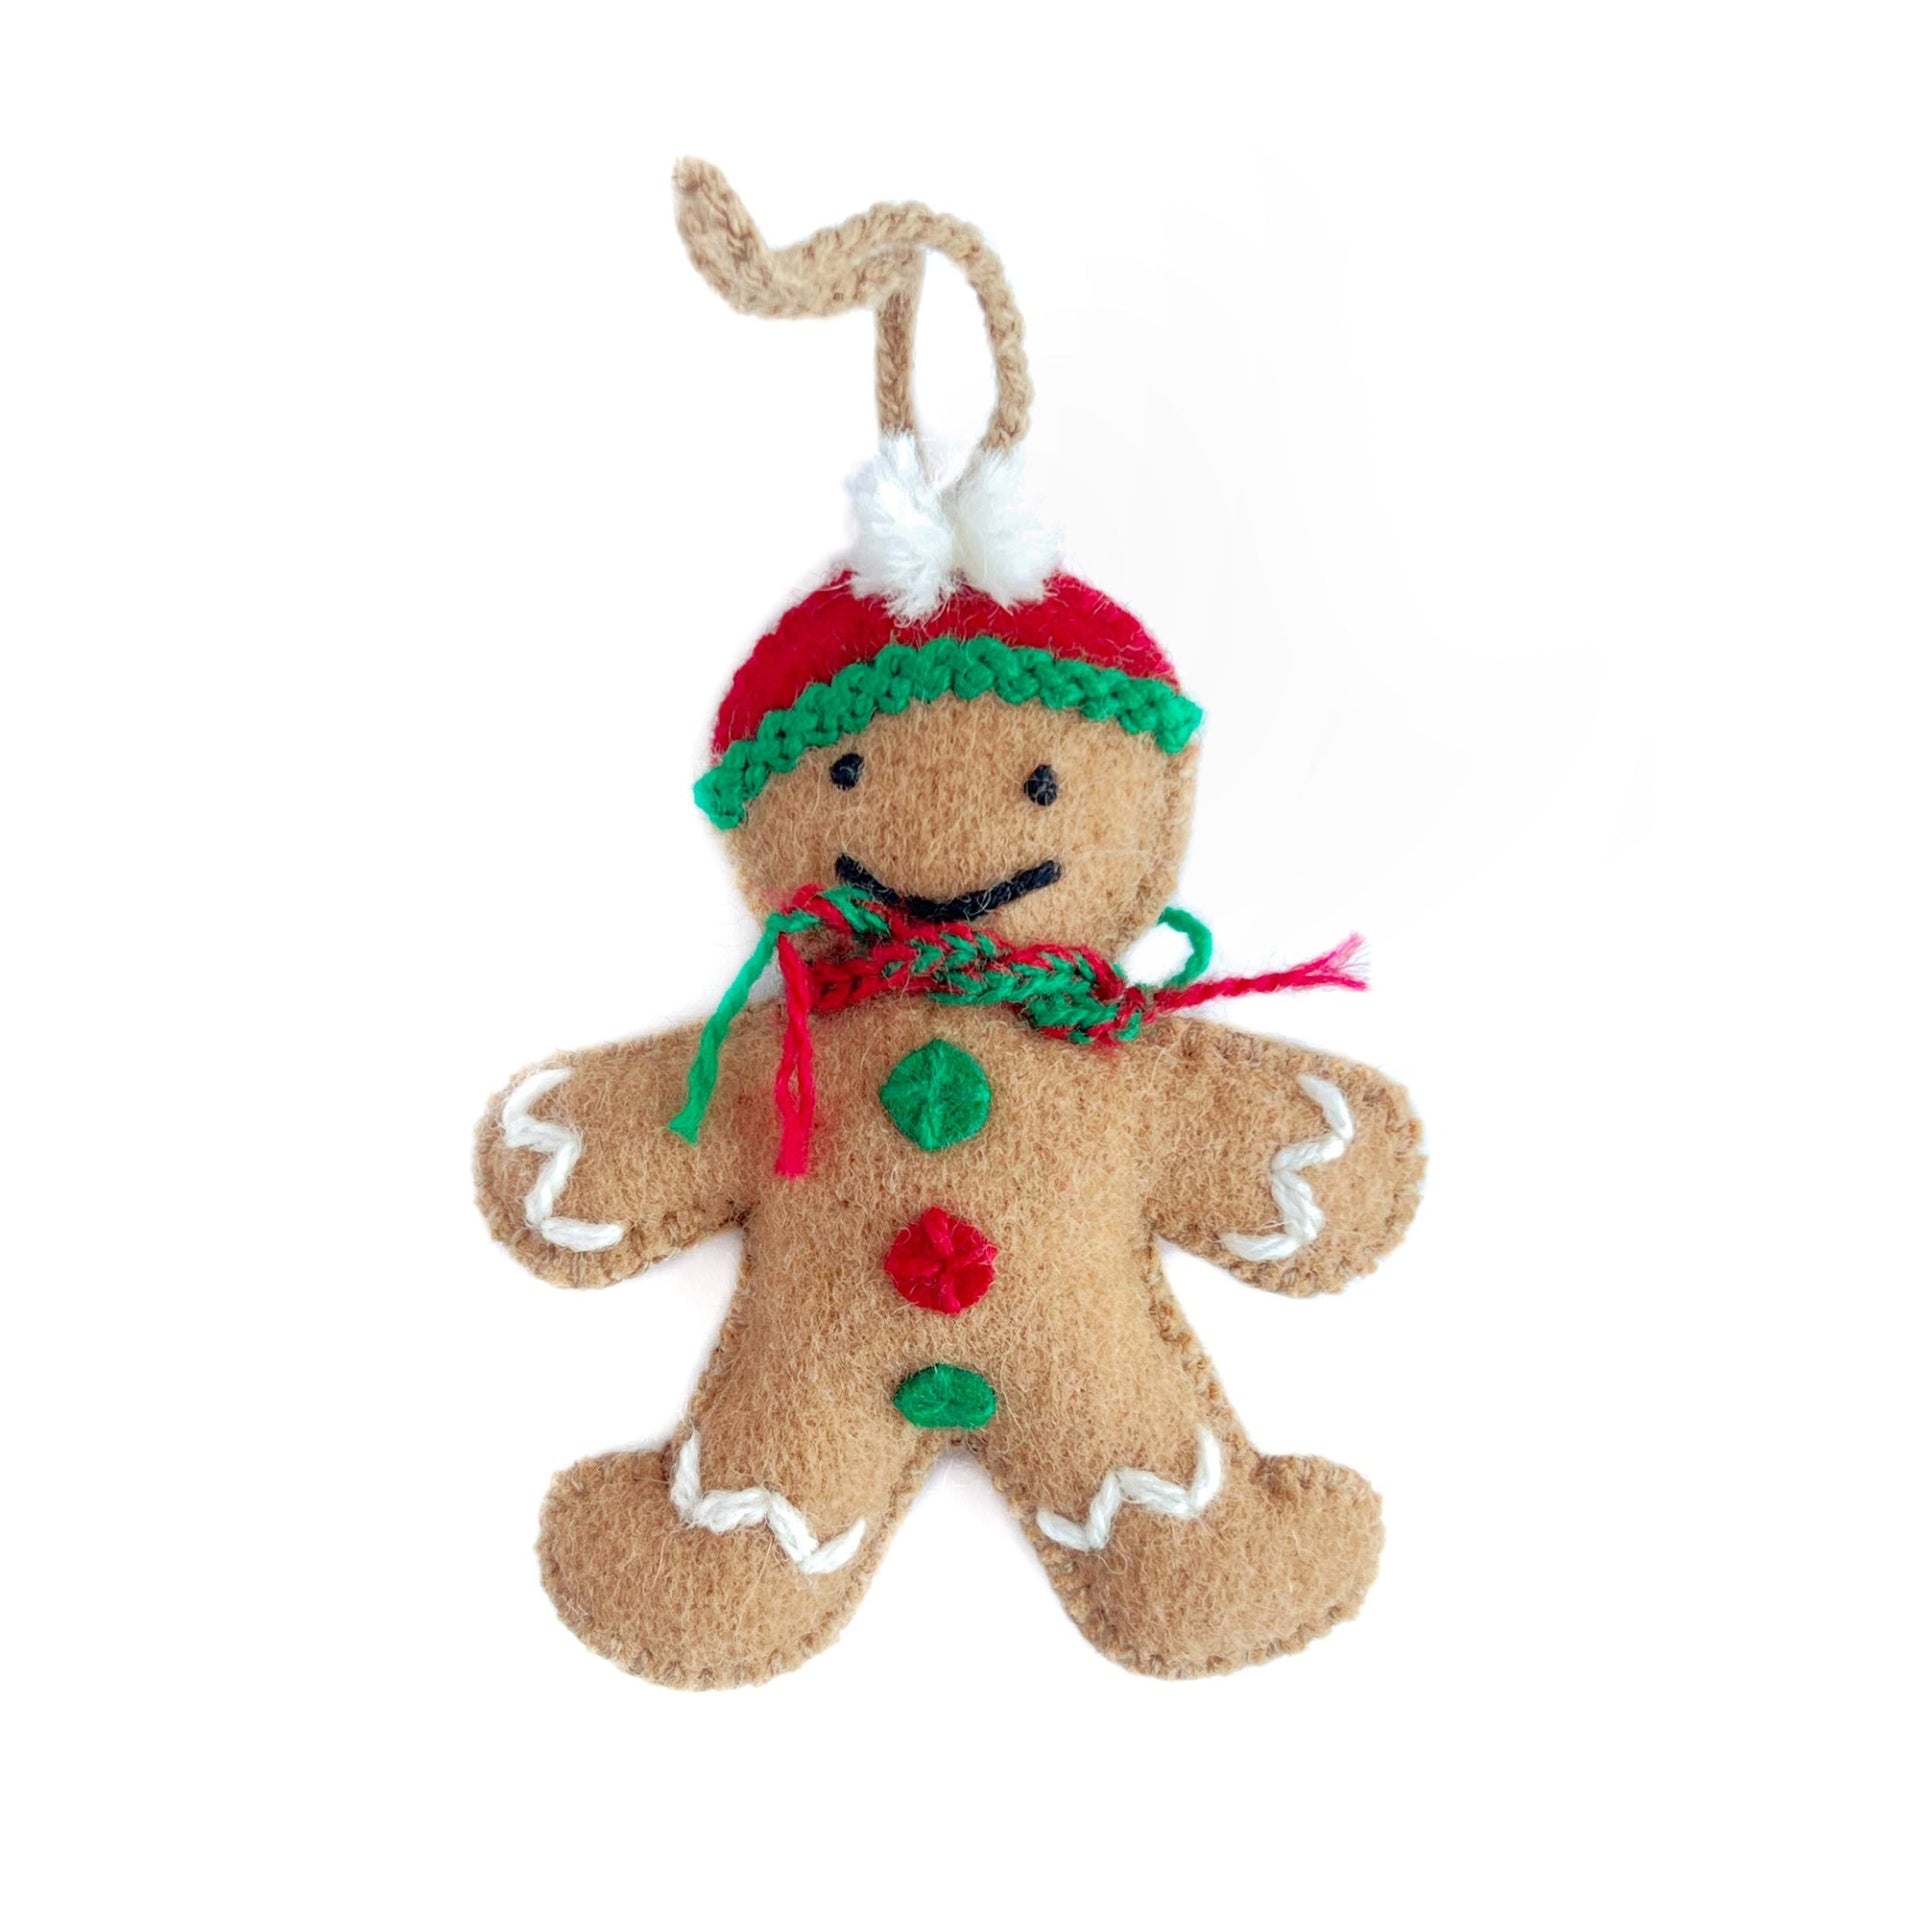 Cute Gingerbread Man Christmas Ornament